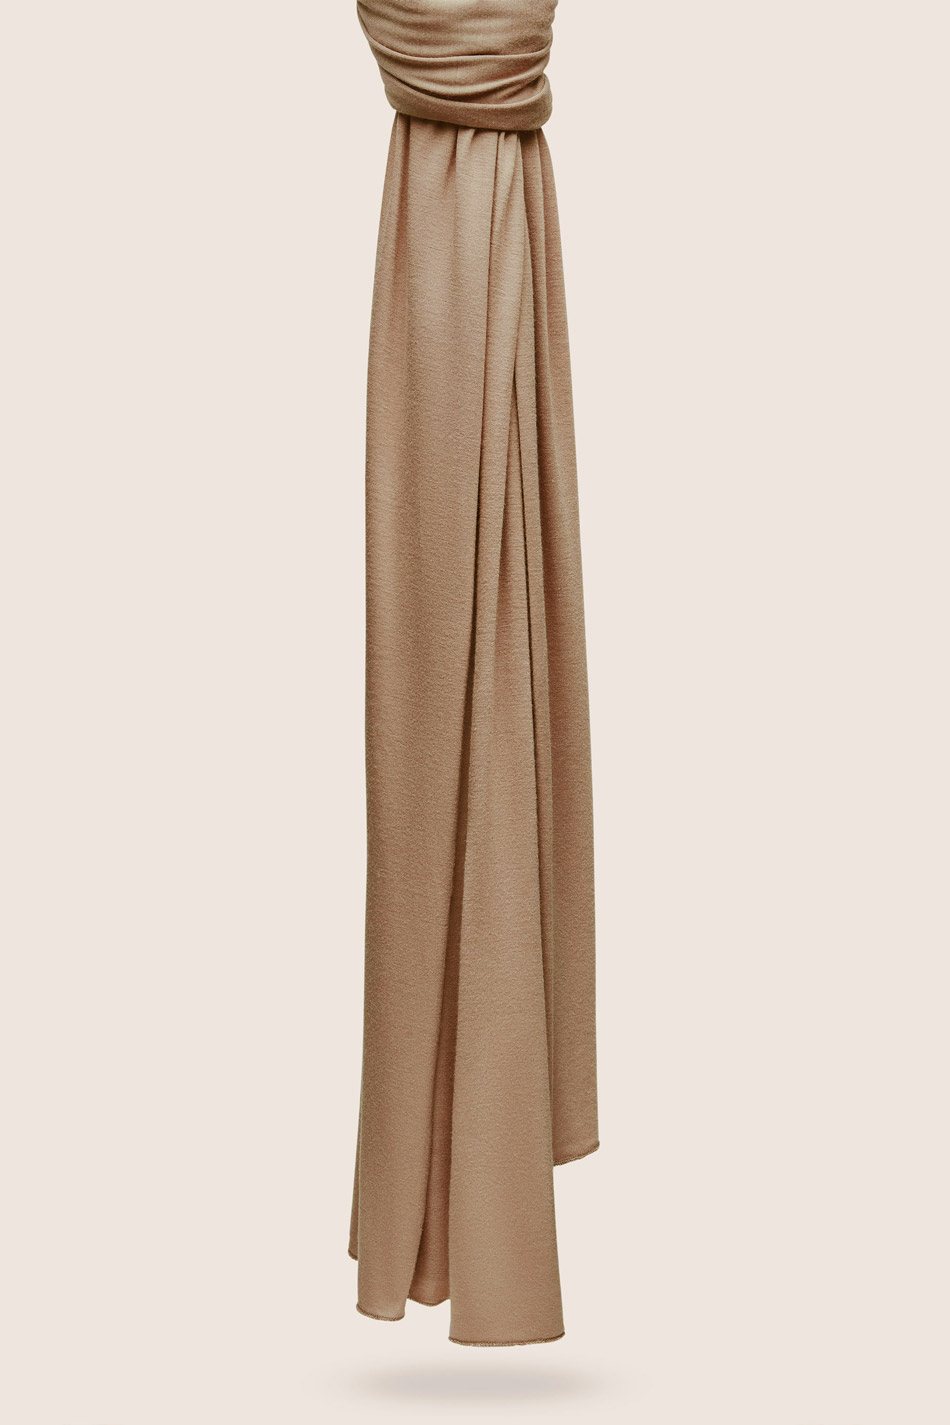 Premium Jersey Hijab - Khaki